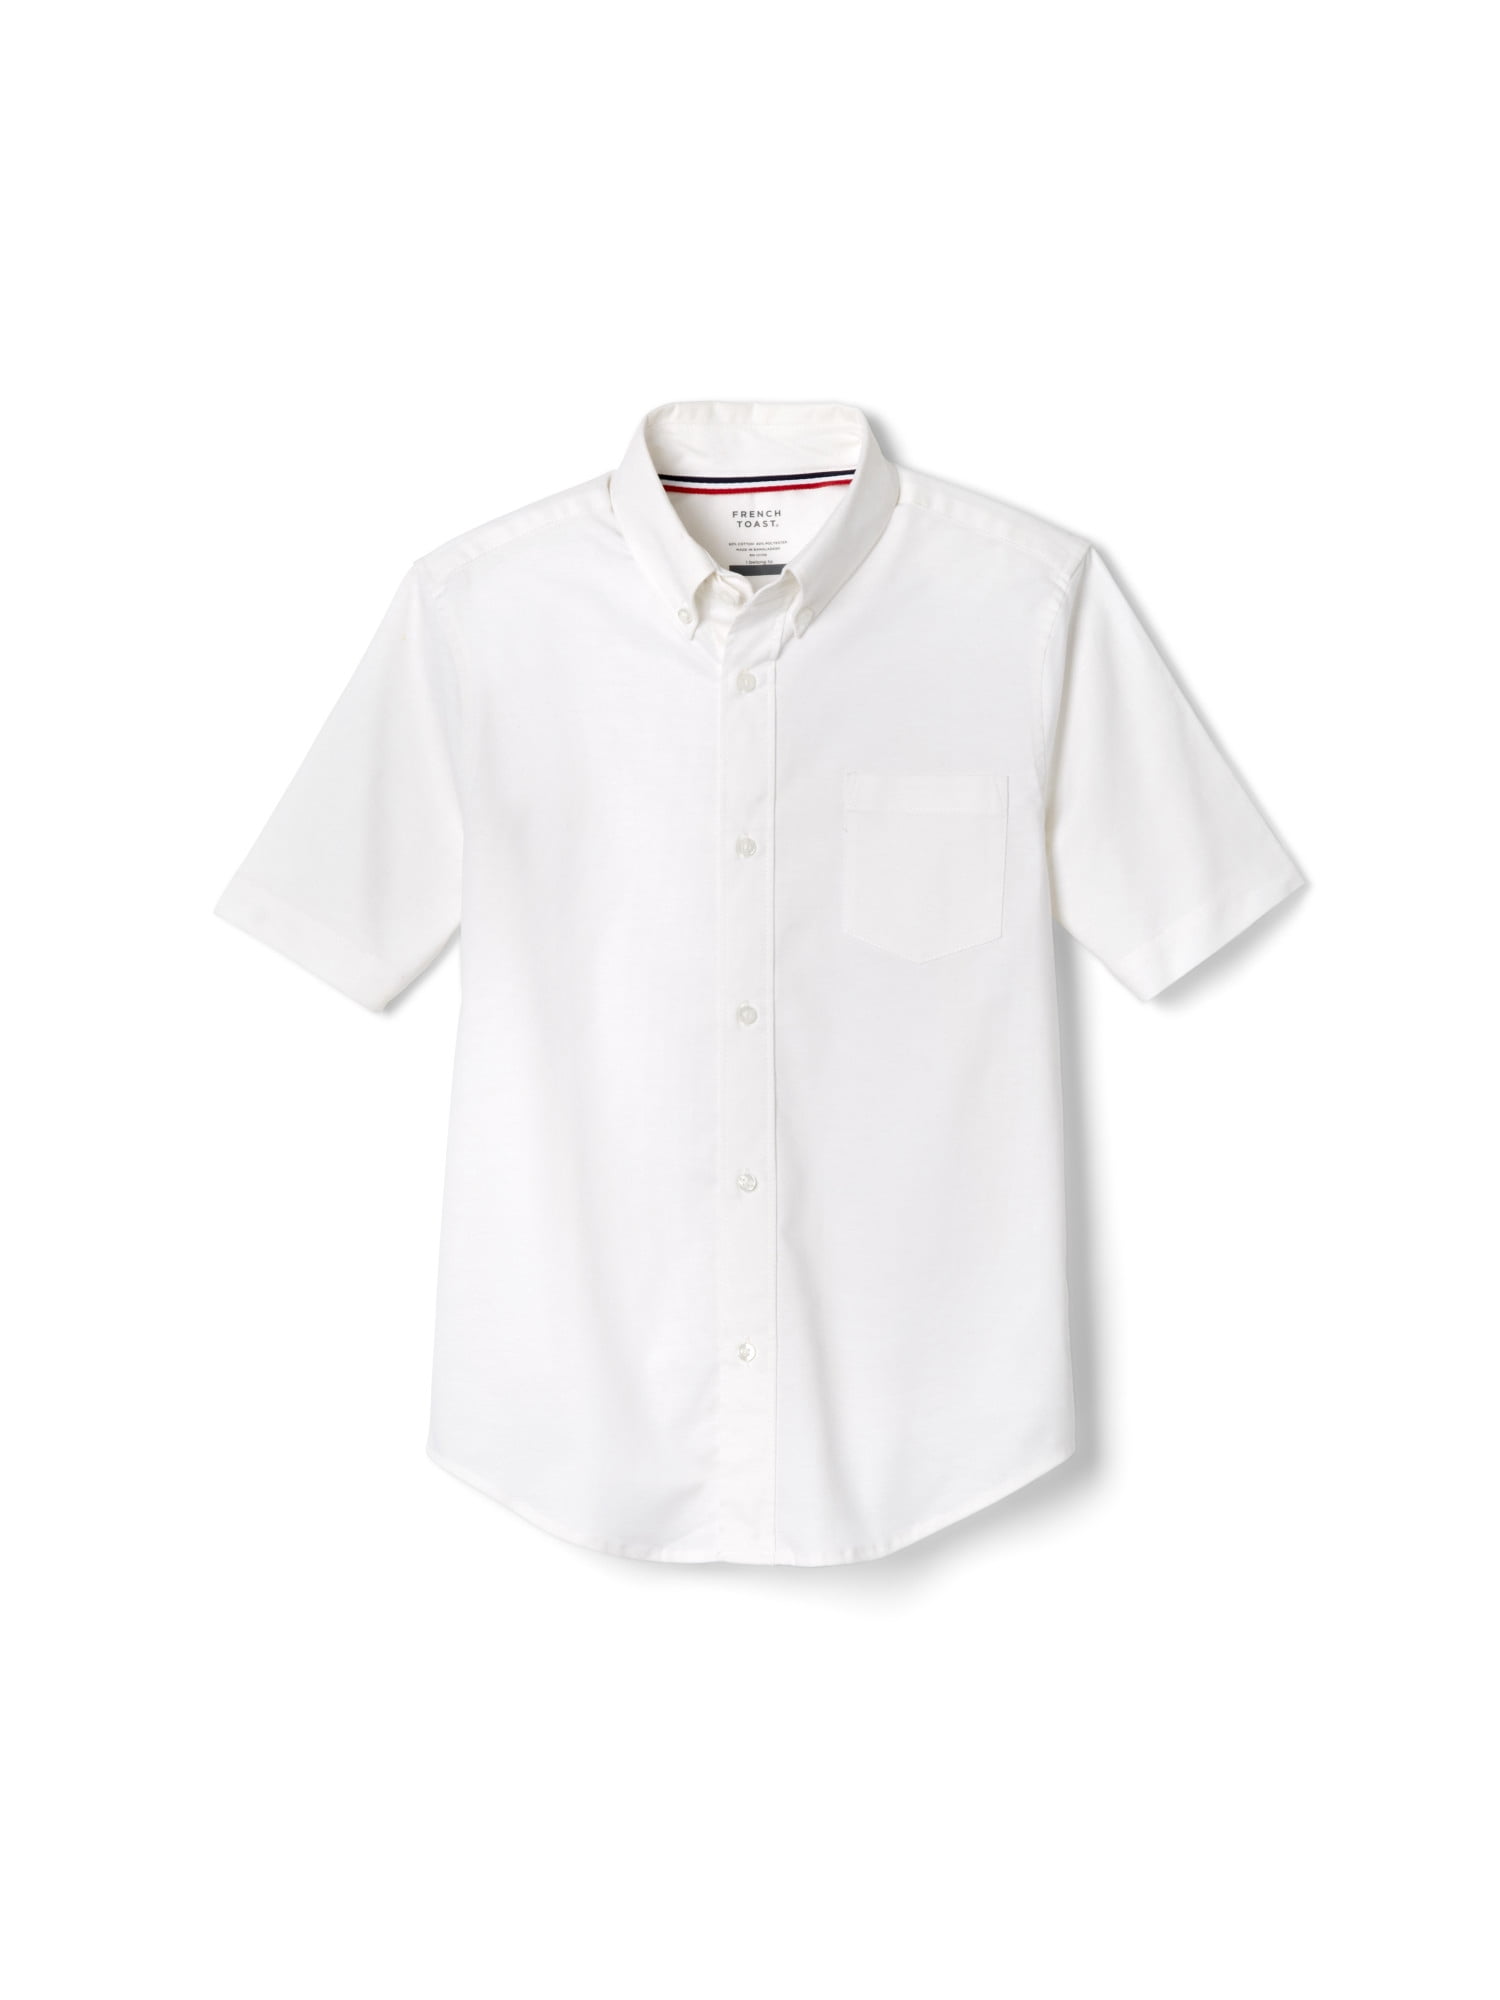 6 French Toast Boys White Short Sleeves Oxford Shirt E9003 White 